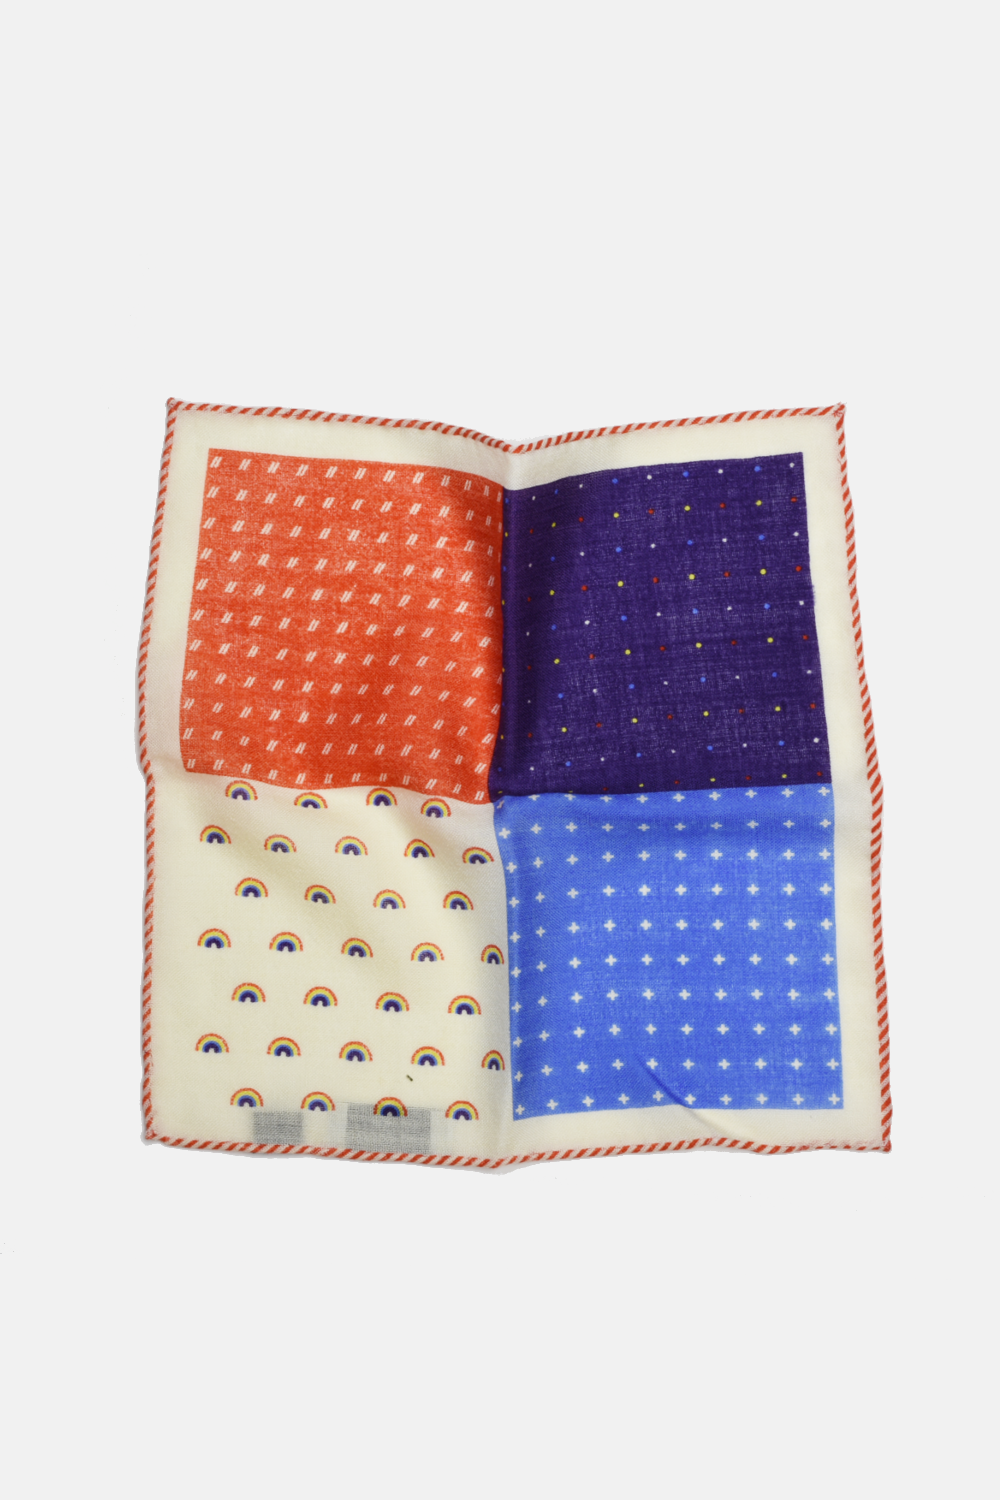 Orange Hem 4 Sided Wool Pocket Square - Pocket Square